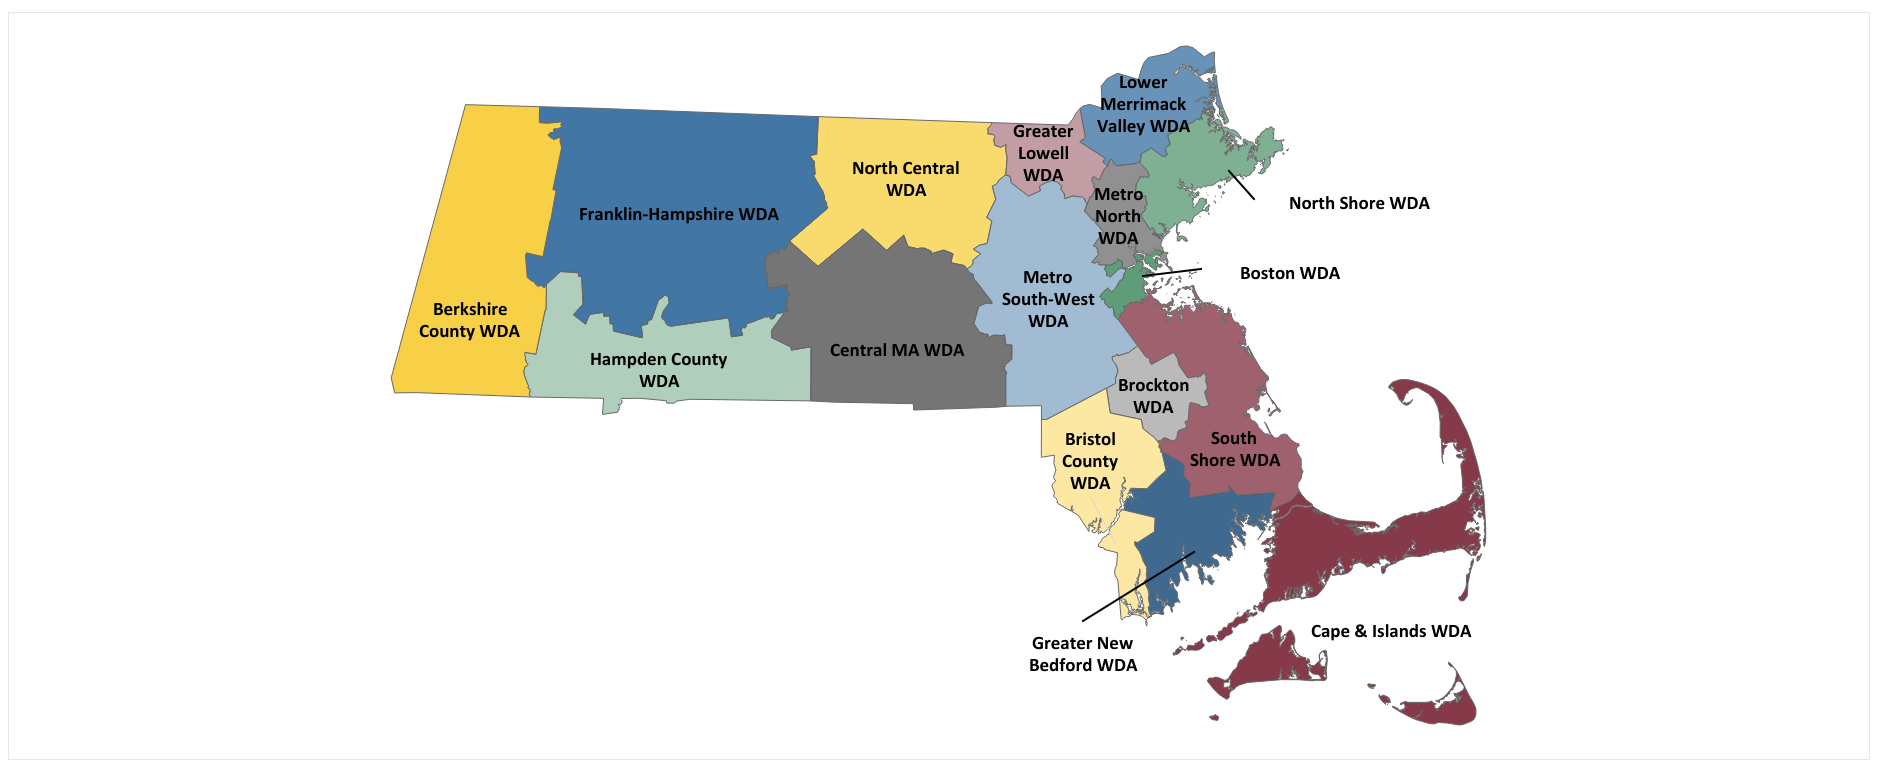 Workforce Development Area Map of Massachusetts